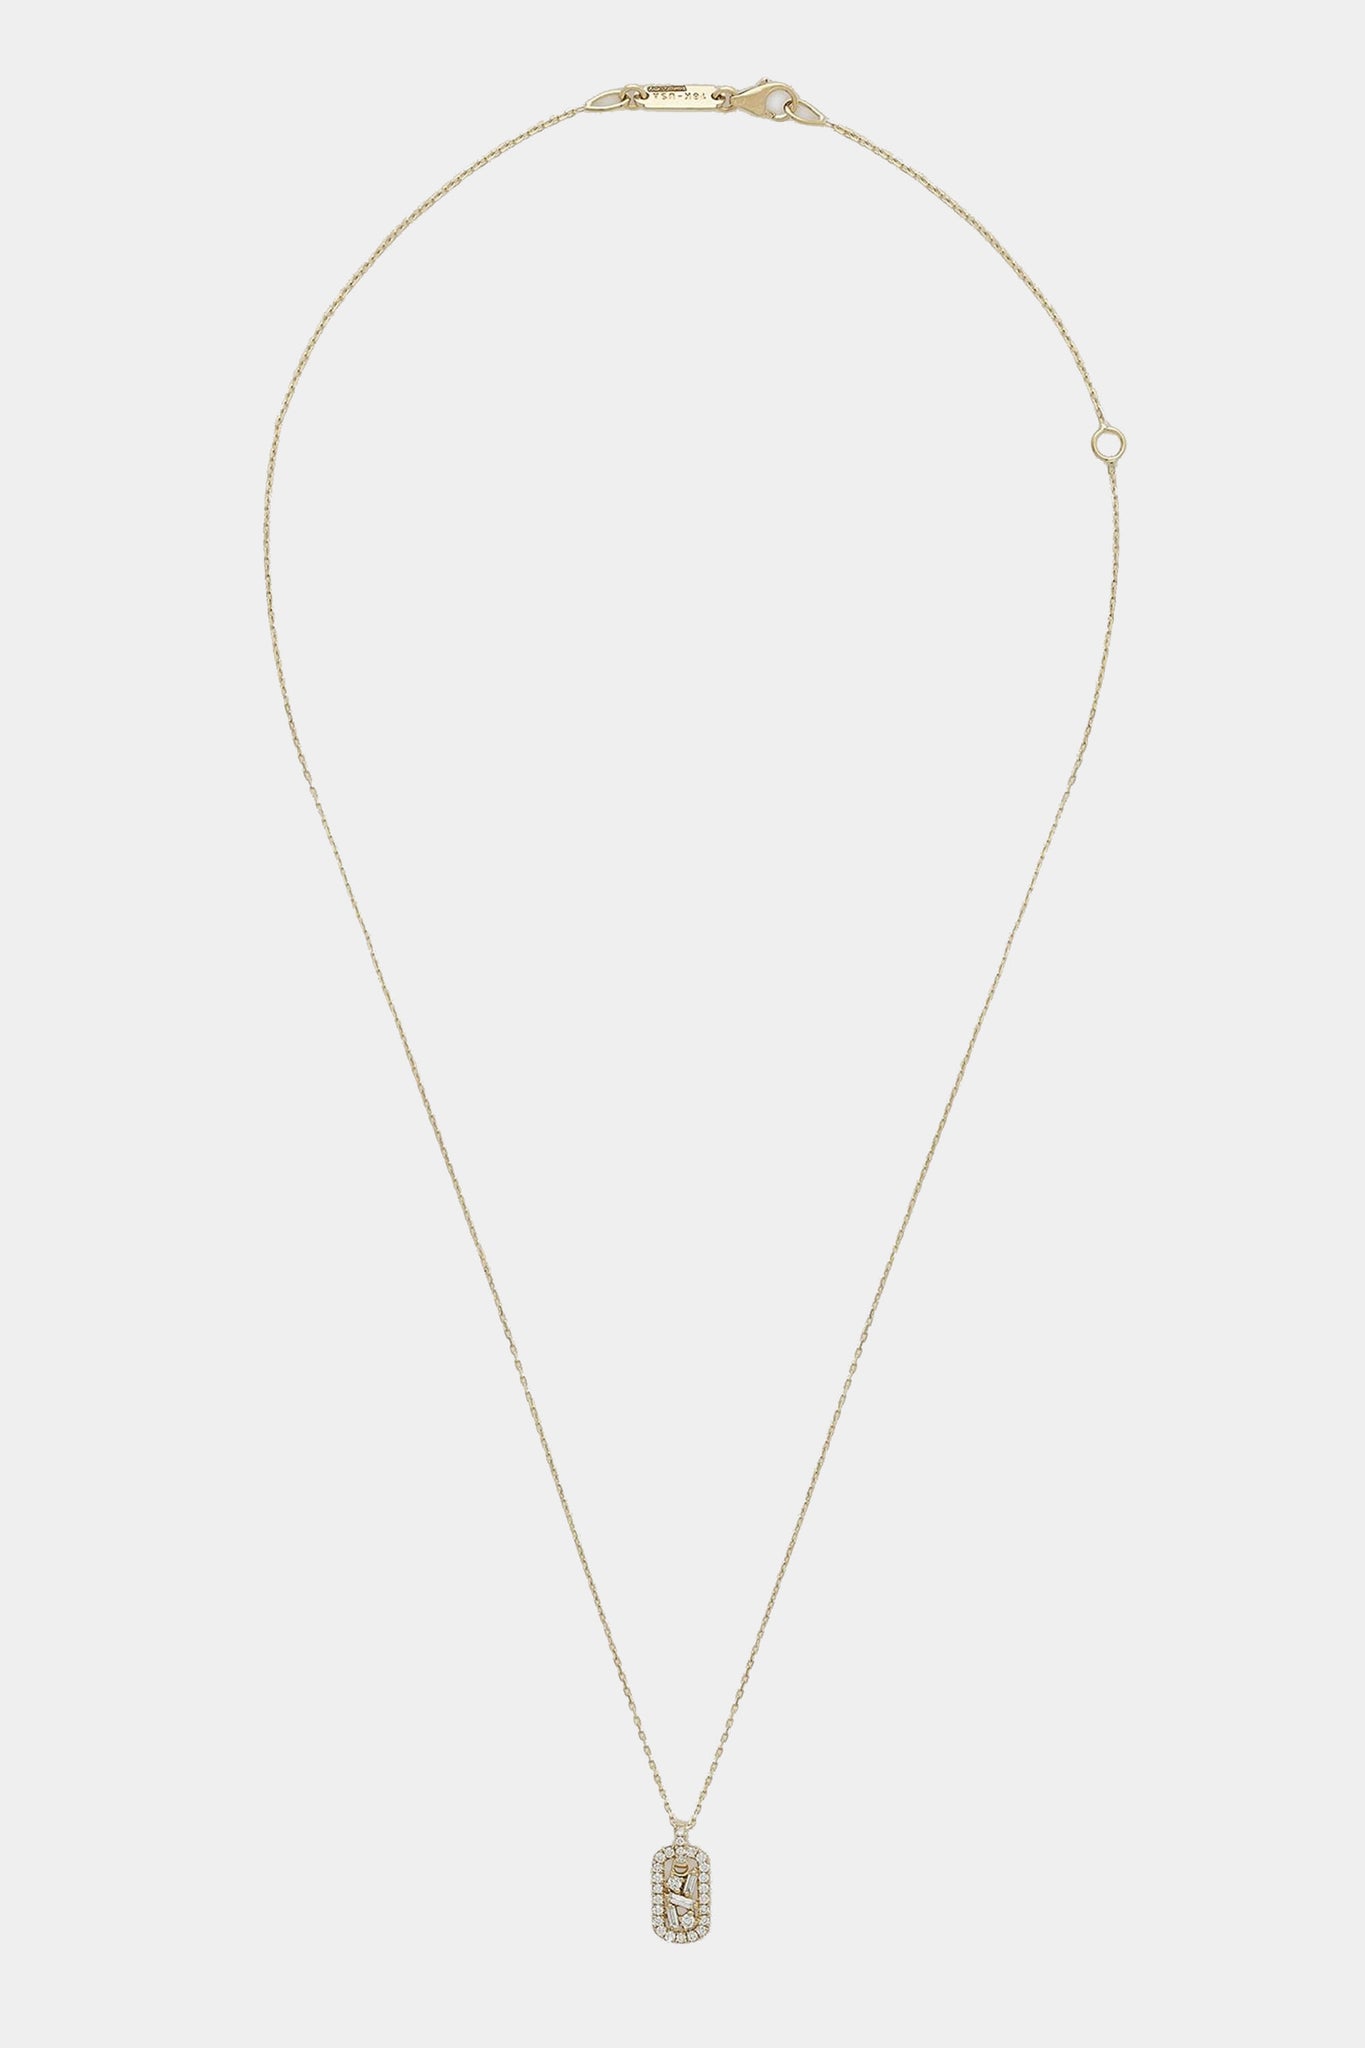 SUZANNE KALAN - Diamond Baby Dog Tag Necklace, 18k gold